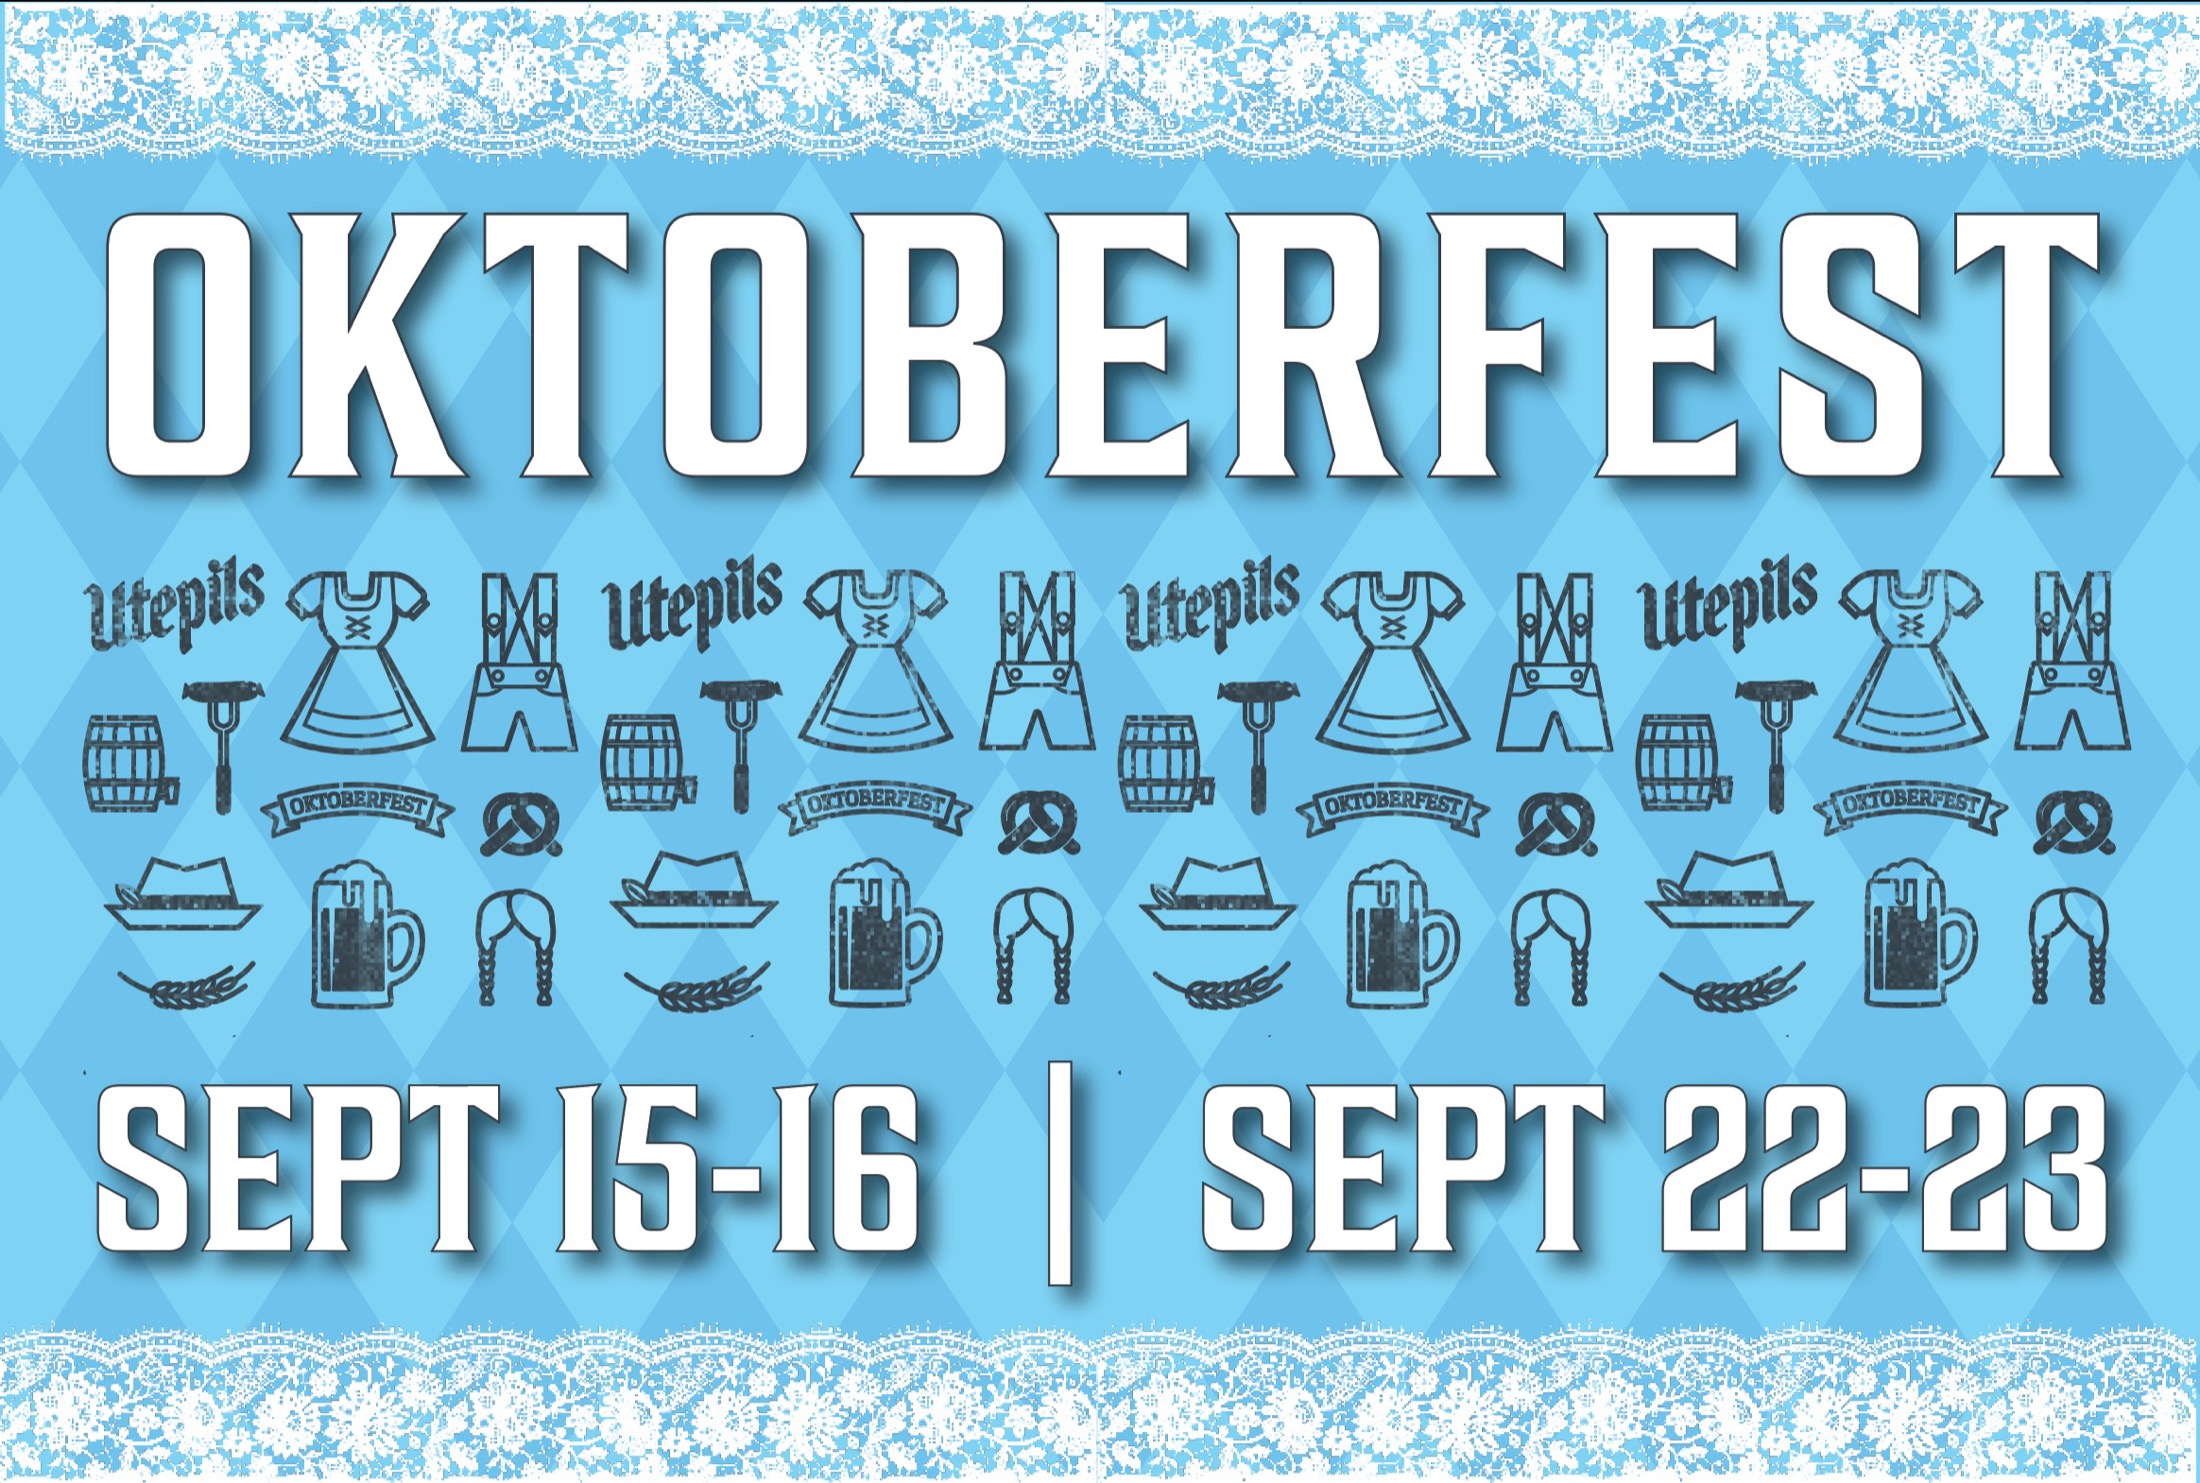 Oktoberfest Sept 15-16 and Sept 22-23